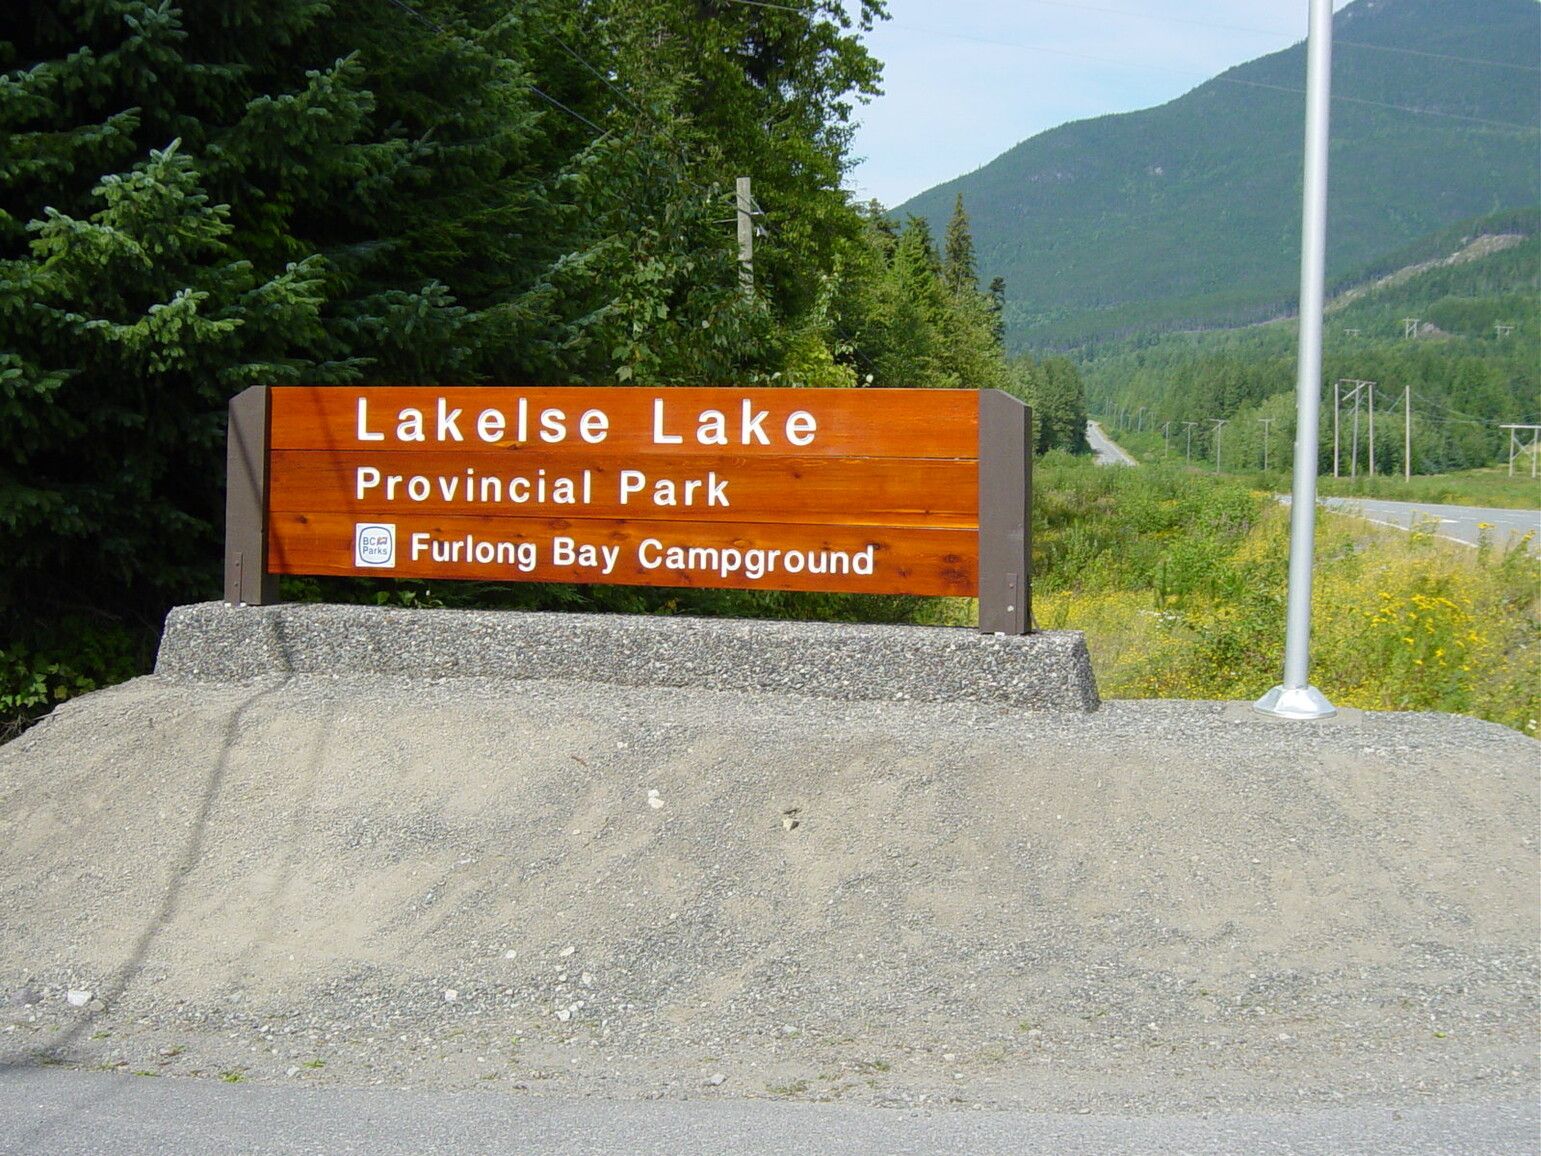 Lakelse Lake Park, Furlong Bay Campground sign.